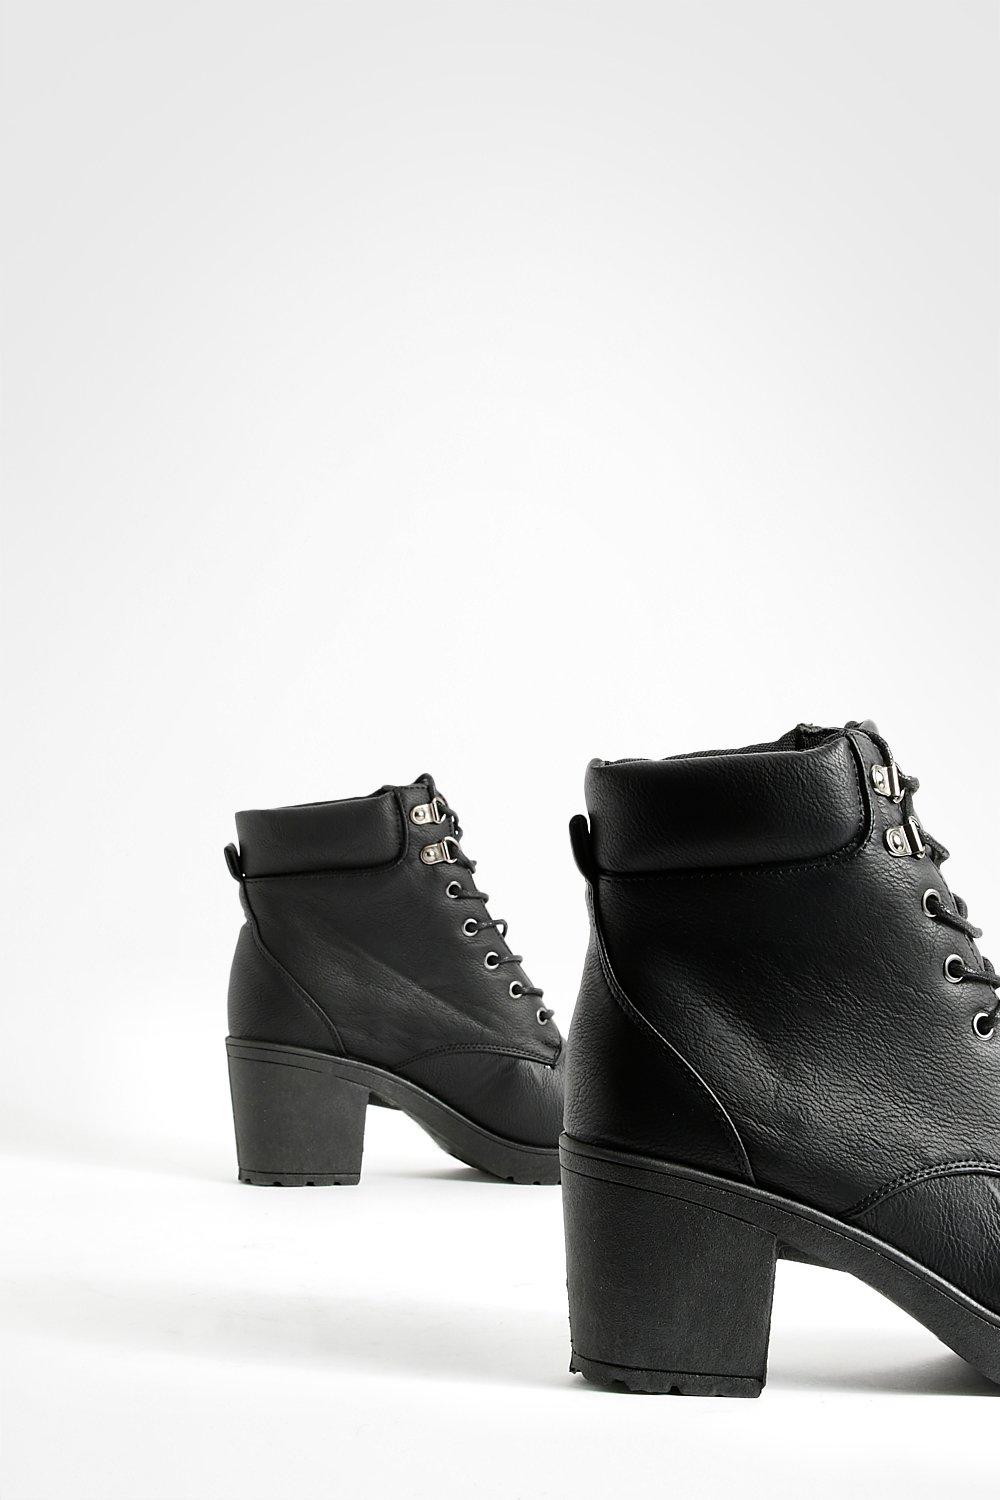 wide width black boots